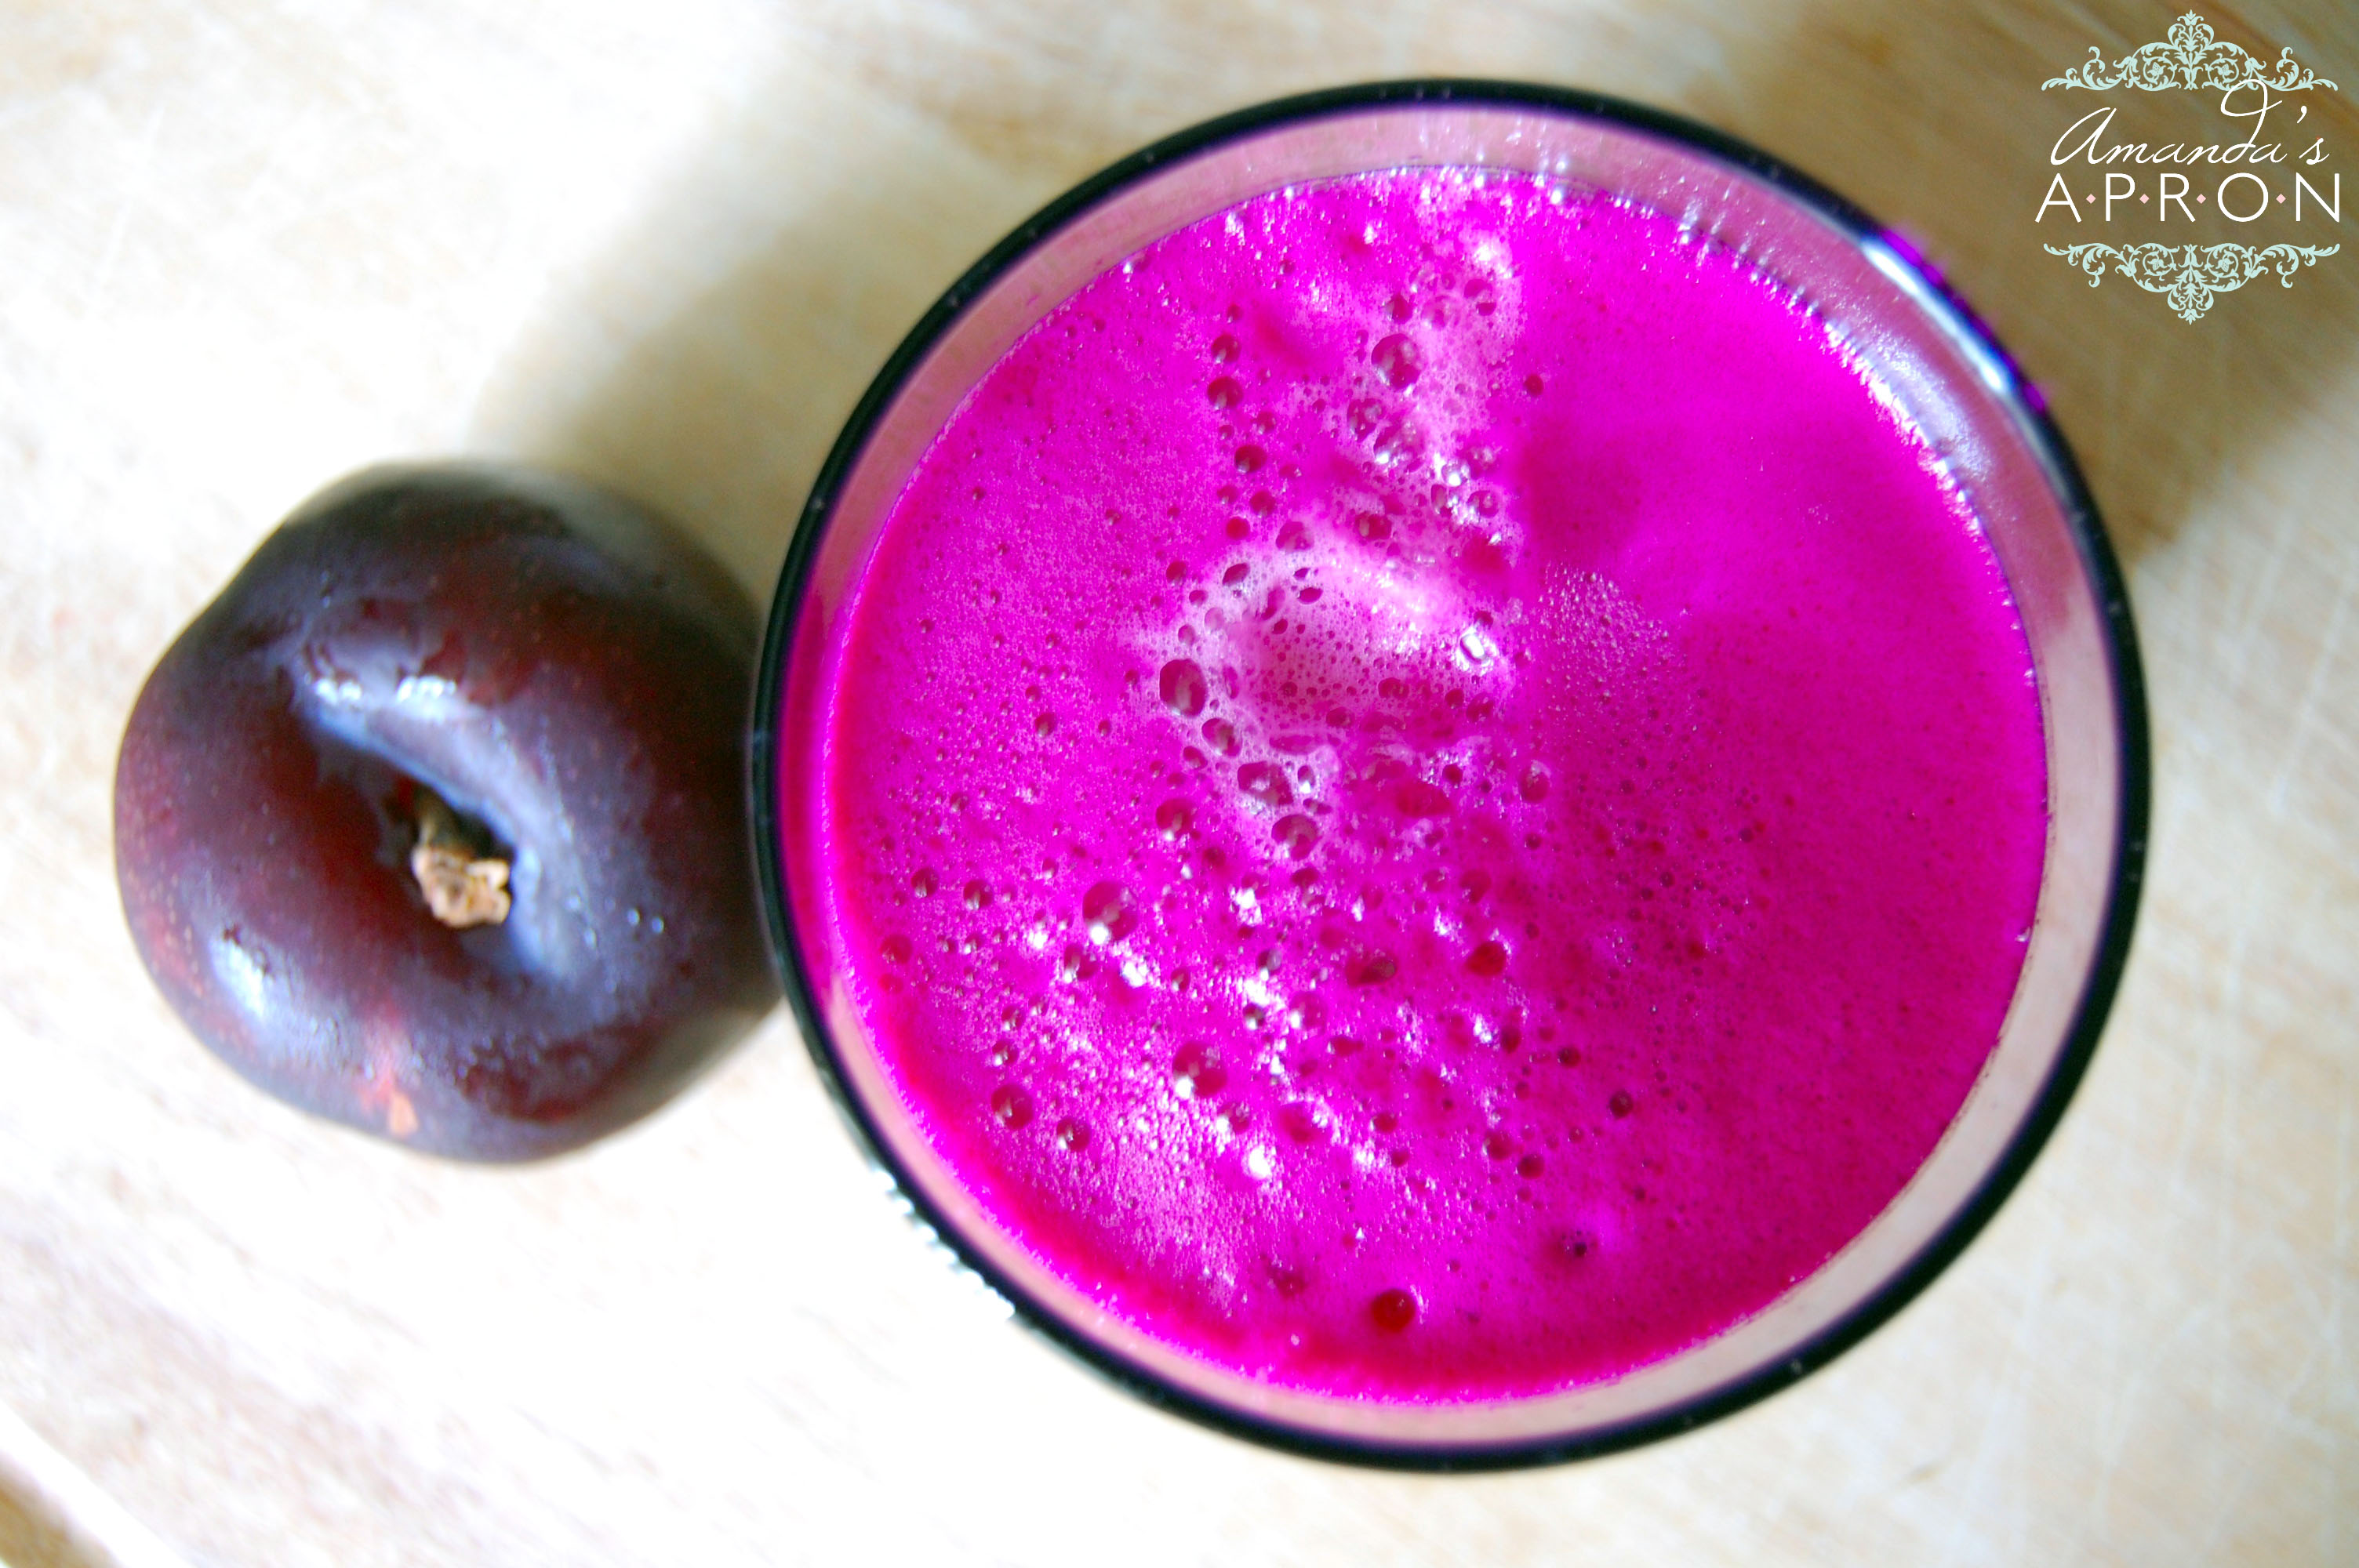 Plum Beet juice | Amanda's Apron blog